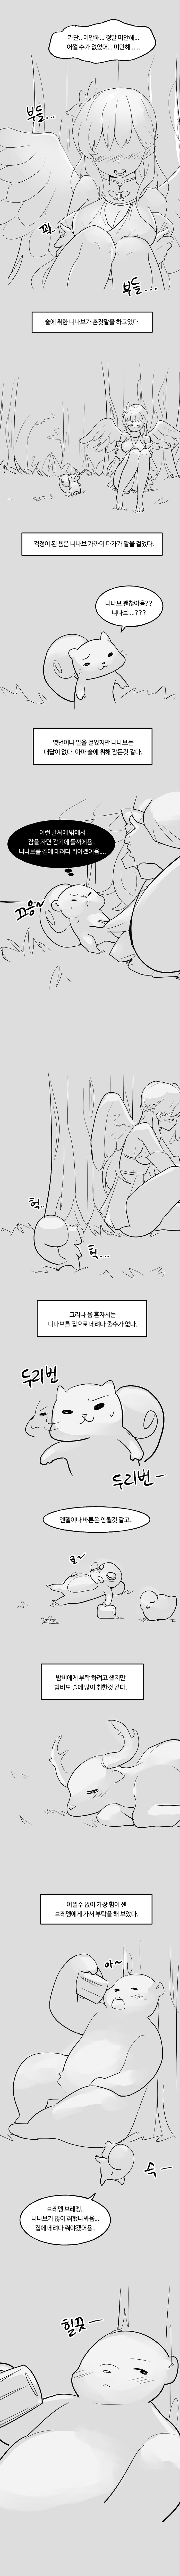 image.png ㅎㅂ)다람쥐 욤은 니나브를 좋아한다.manhwa